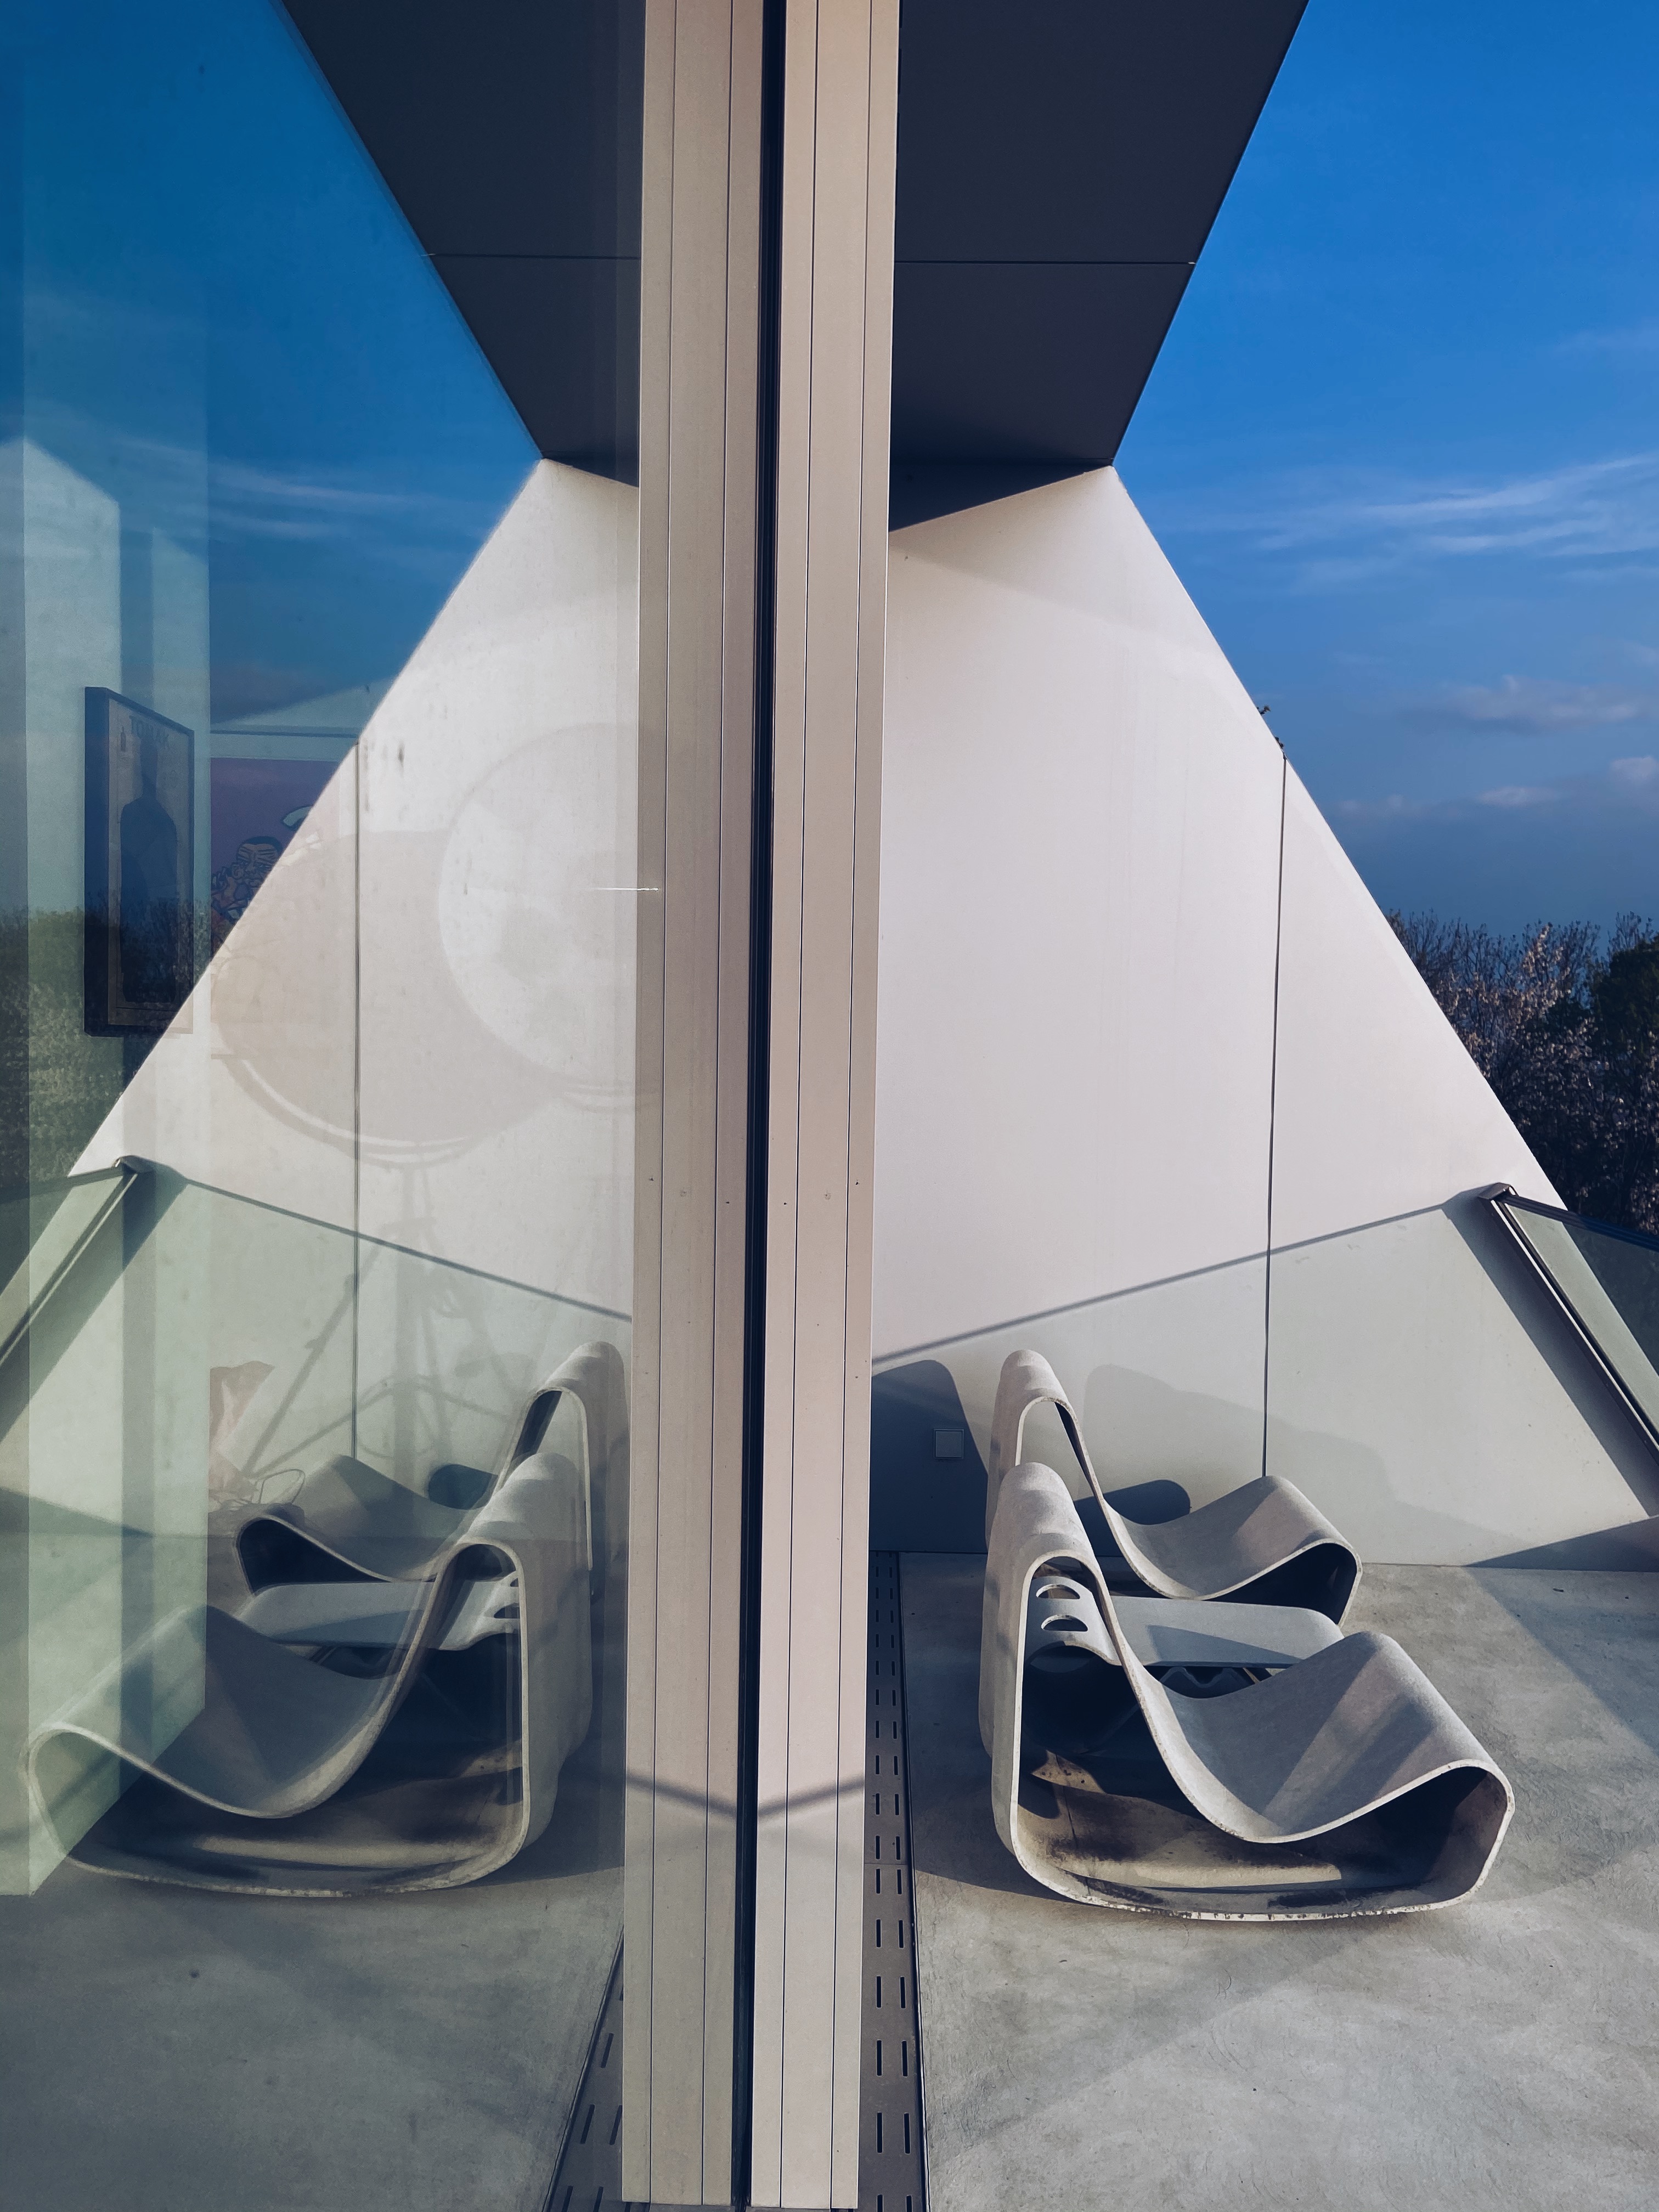 Beton Dekoration Edit editors Pick Outdoor Inspiration Balkon Fenster Glas